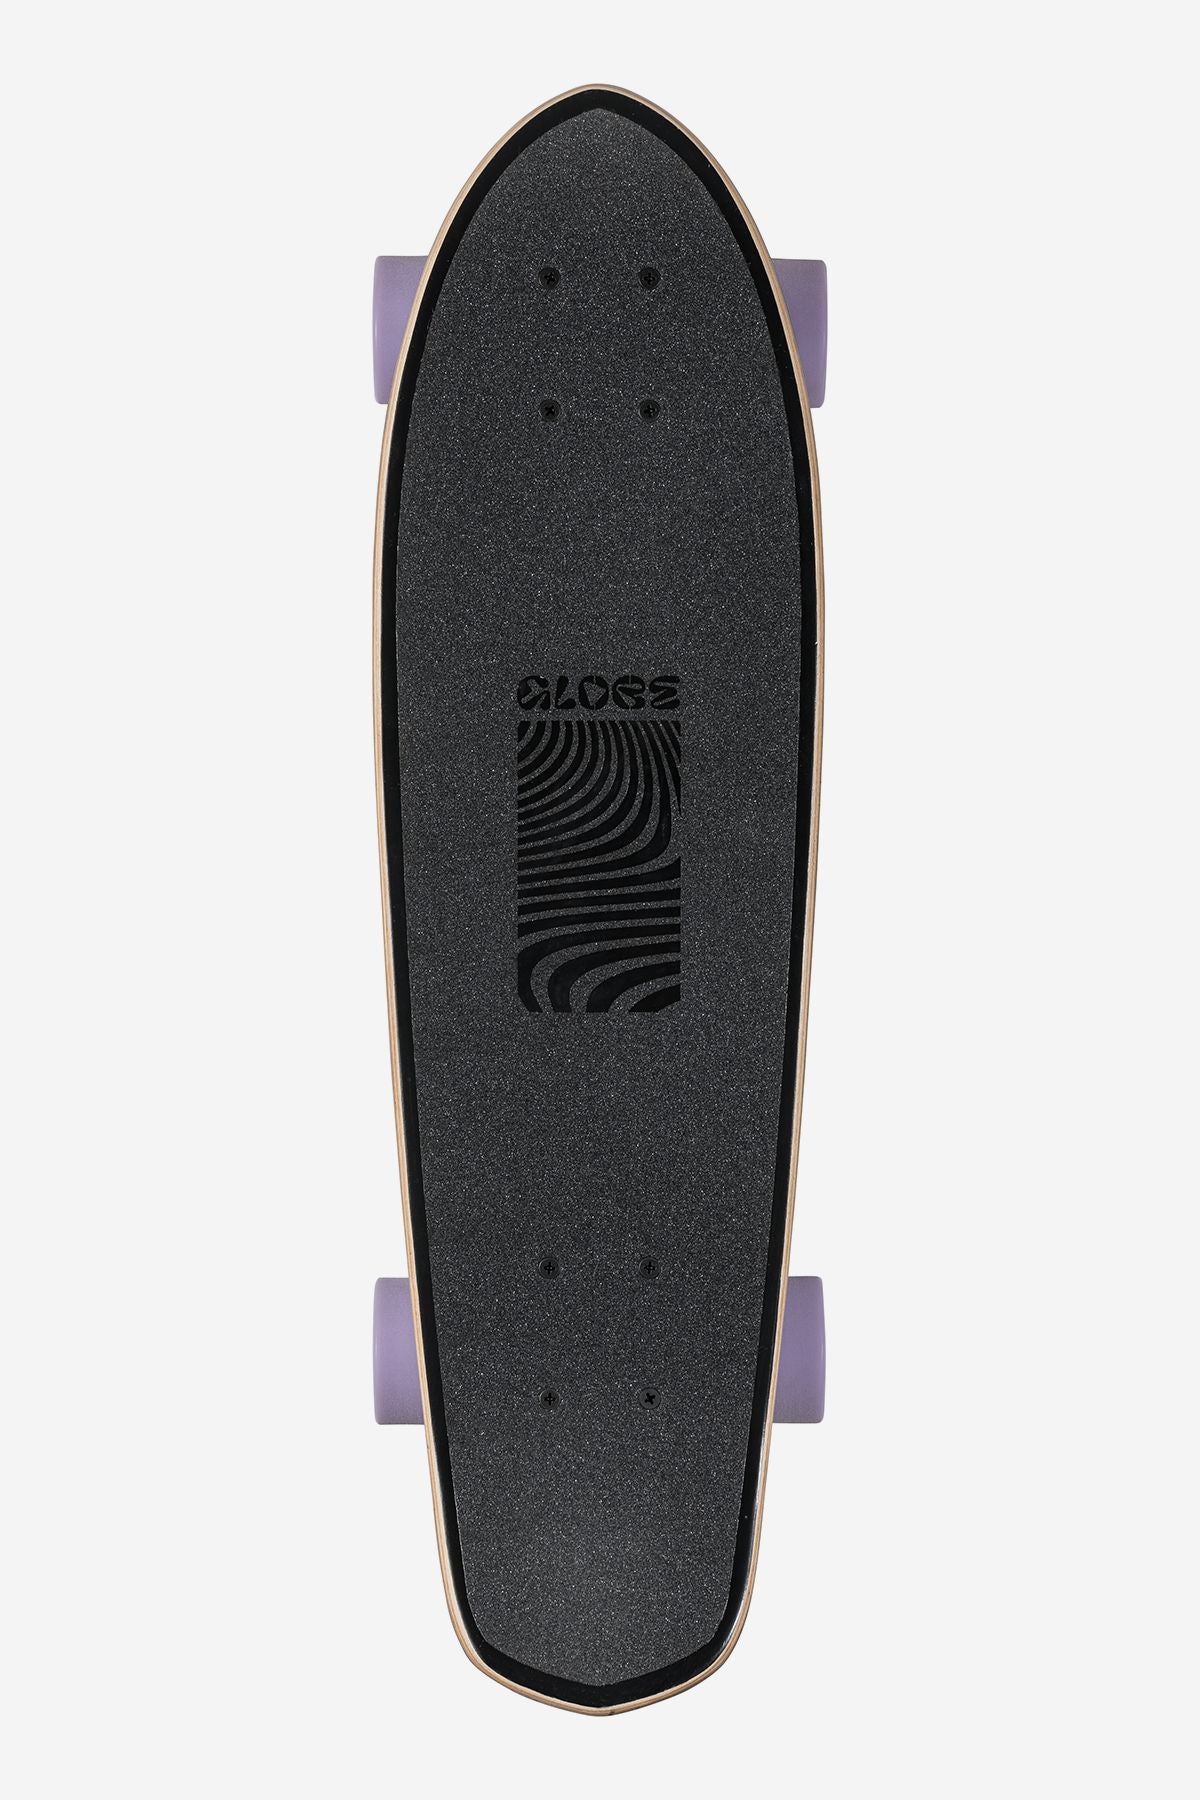 top grip tape of Blazer 26" Cruiser - Black/purple